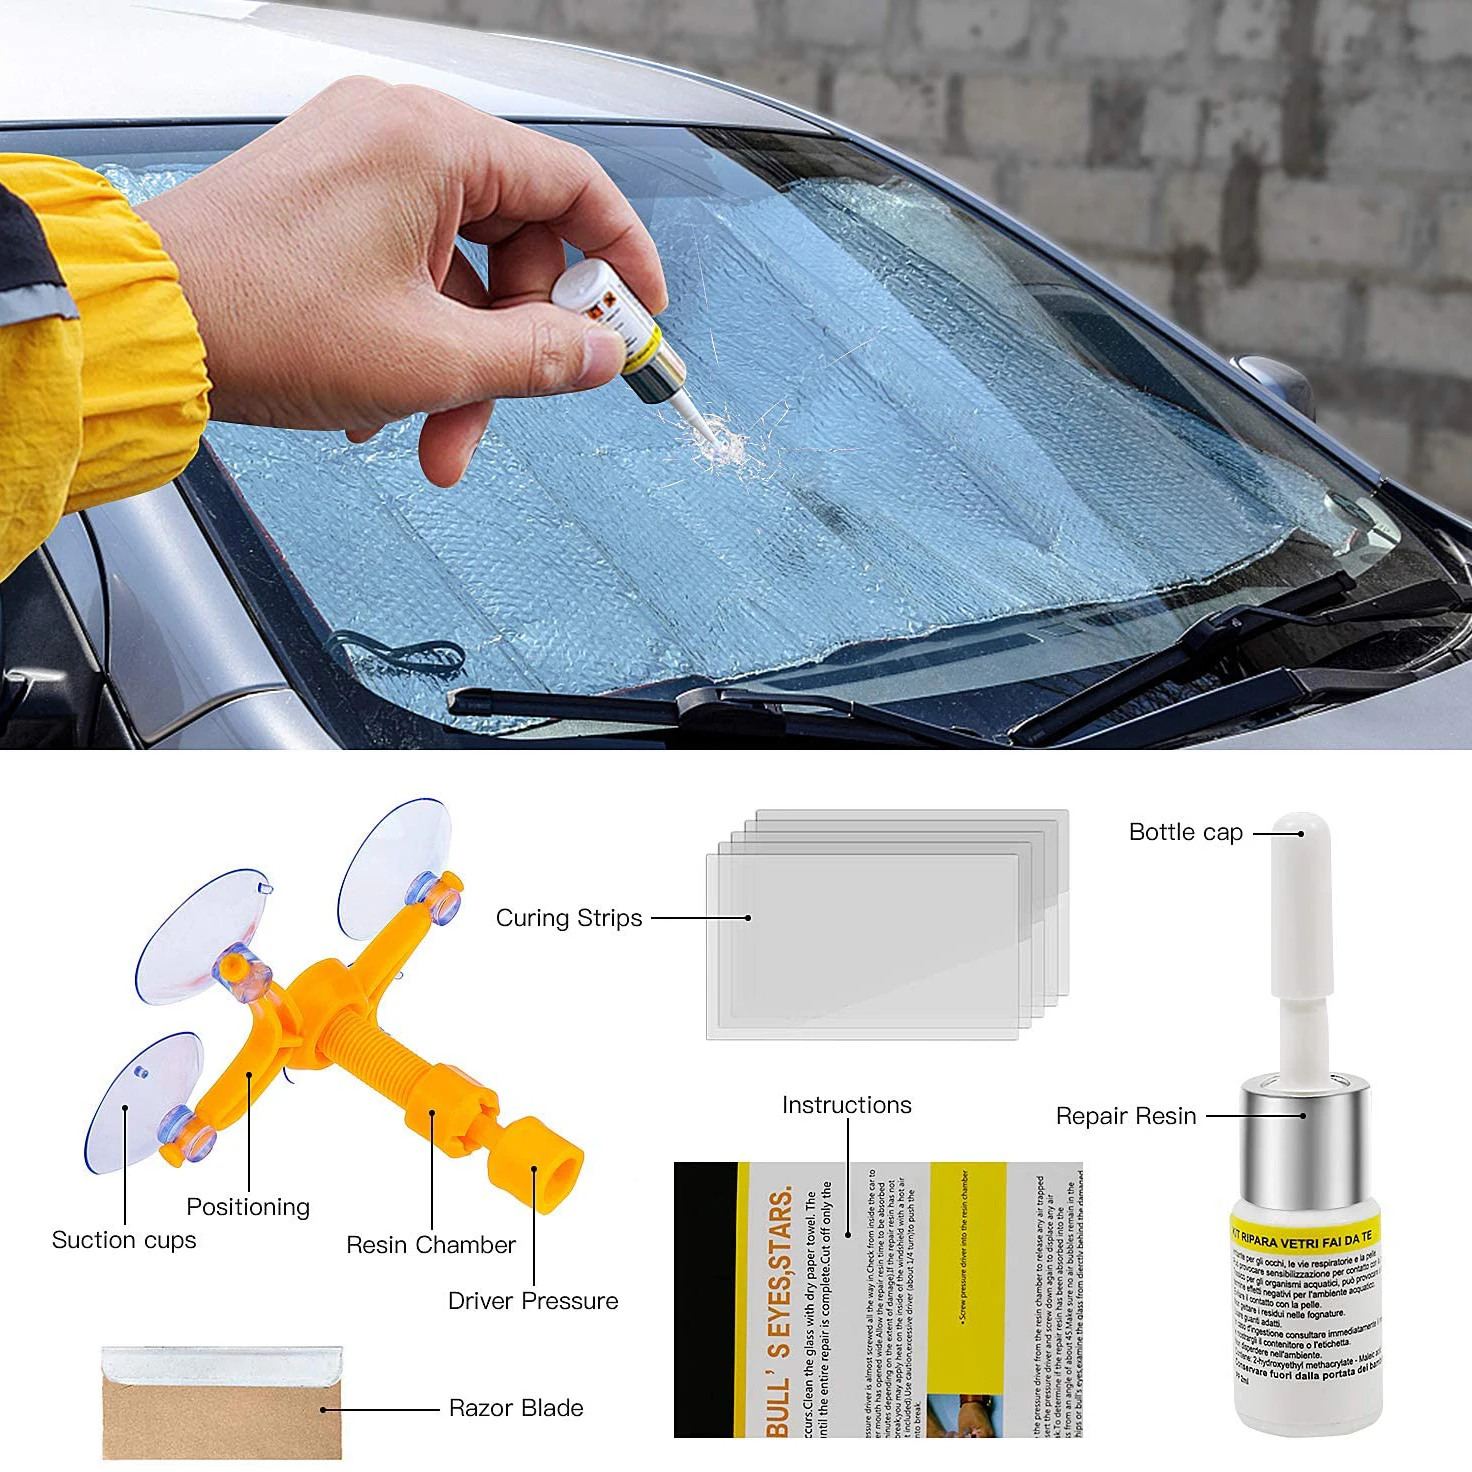 Windshield Repair Kit Window Glass Scratch Repair Kit Car Window Care Tool  Car Repair Care Tools for Auto Maintenance Repairing